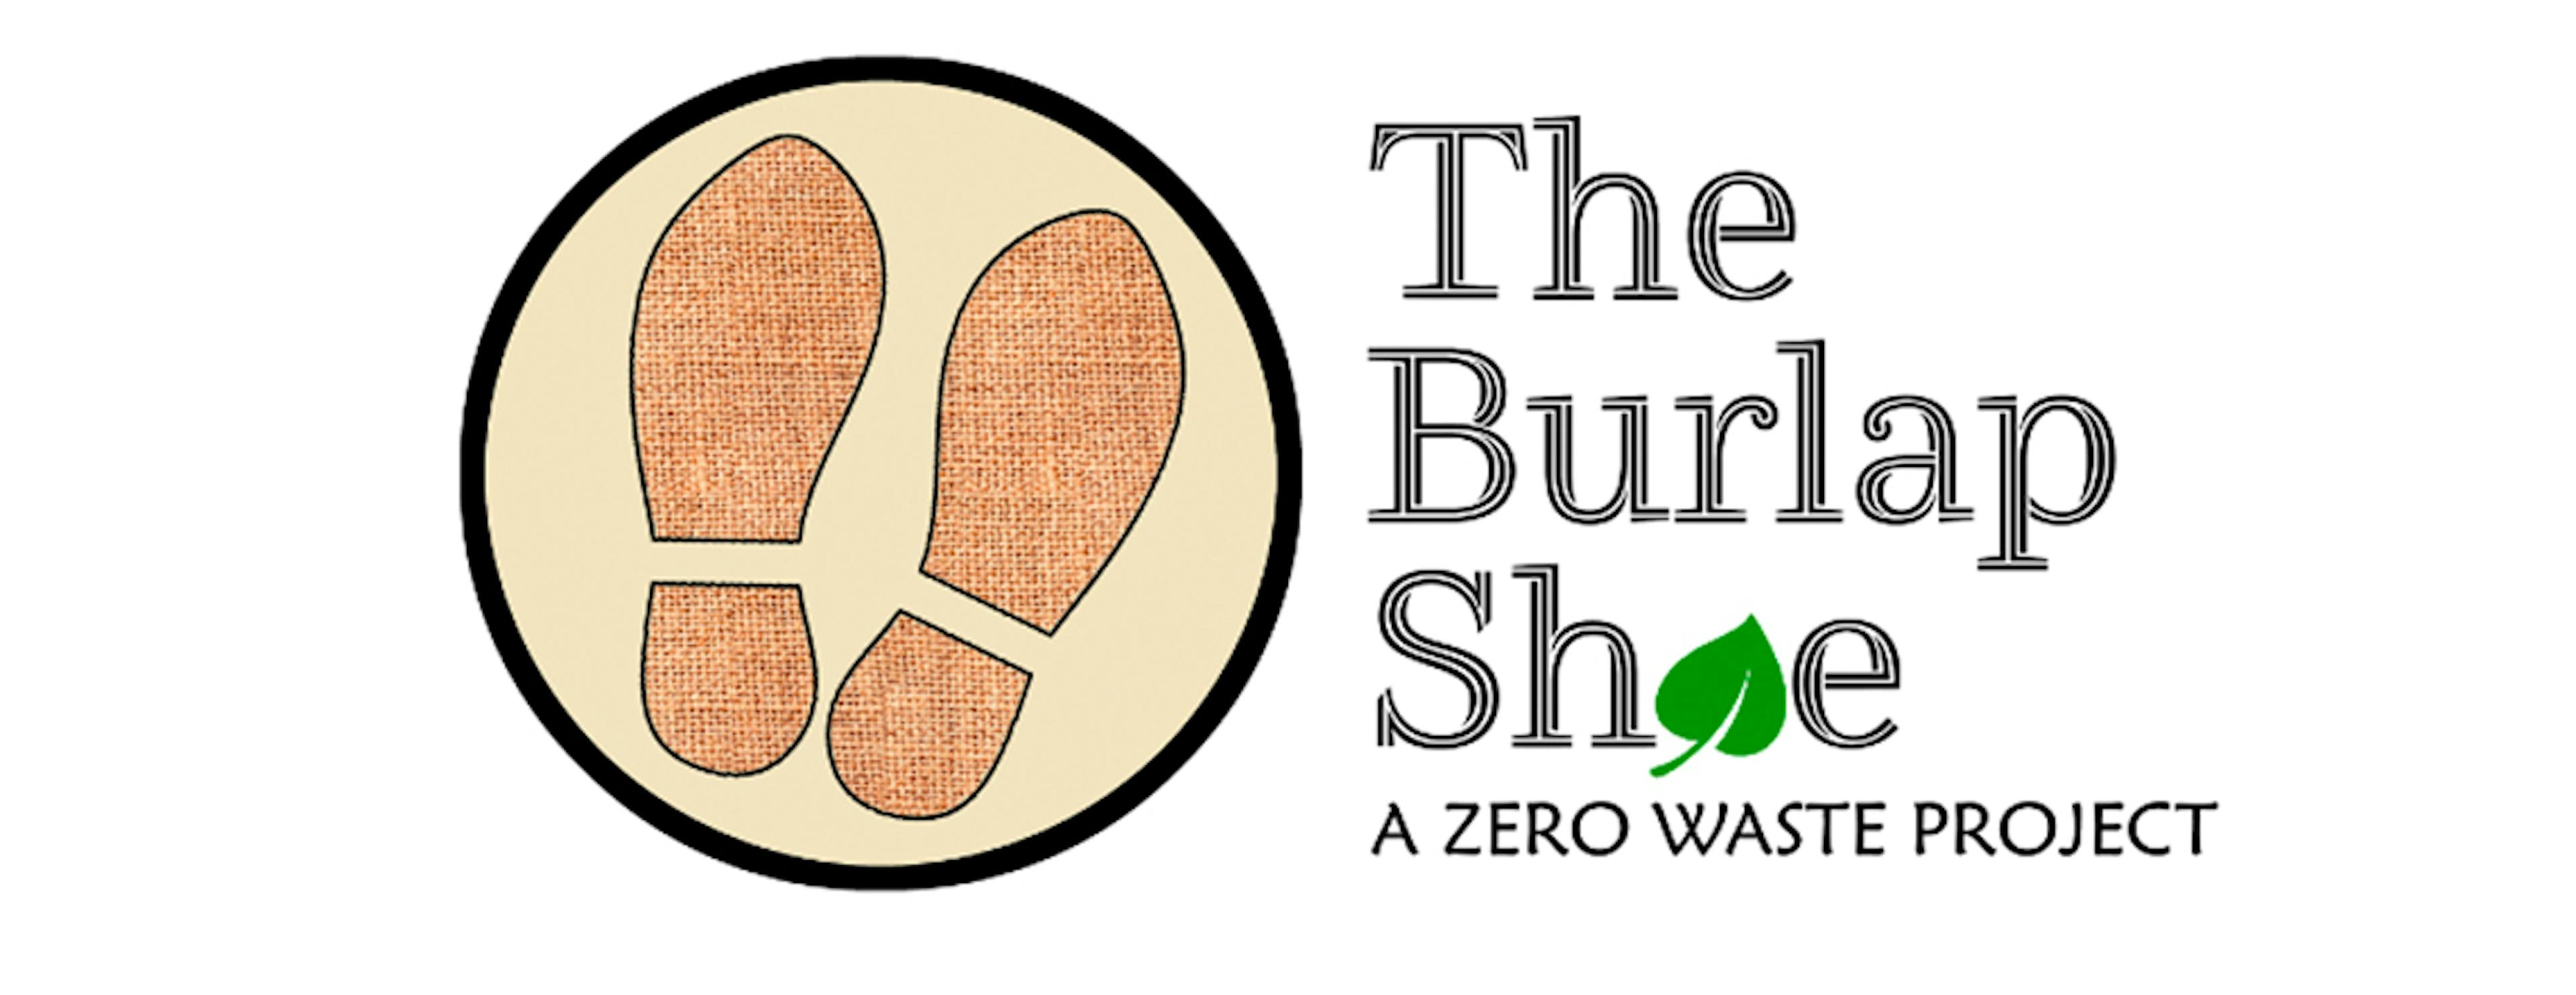 Burlap Shoe stepping up to Zero Waste 